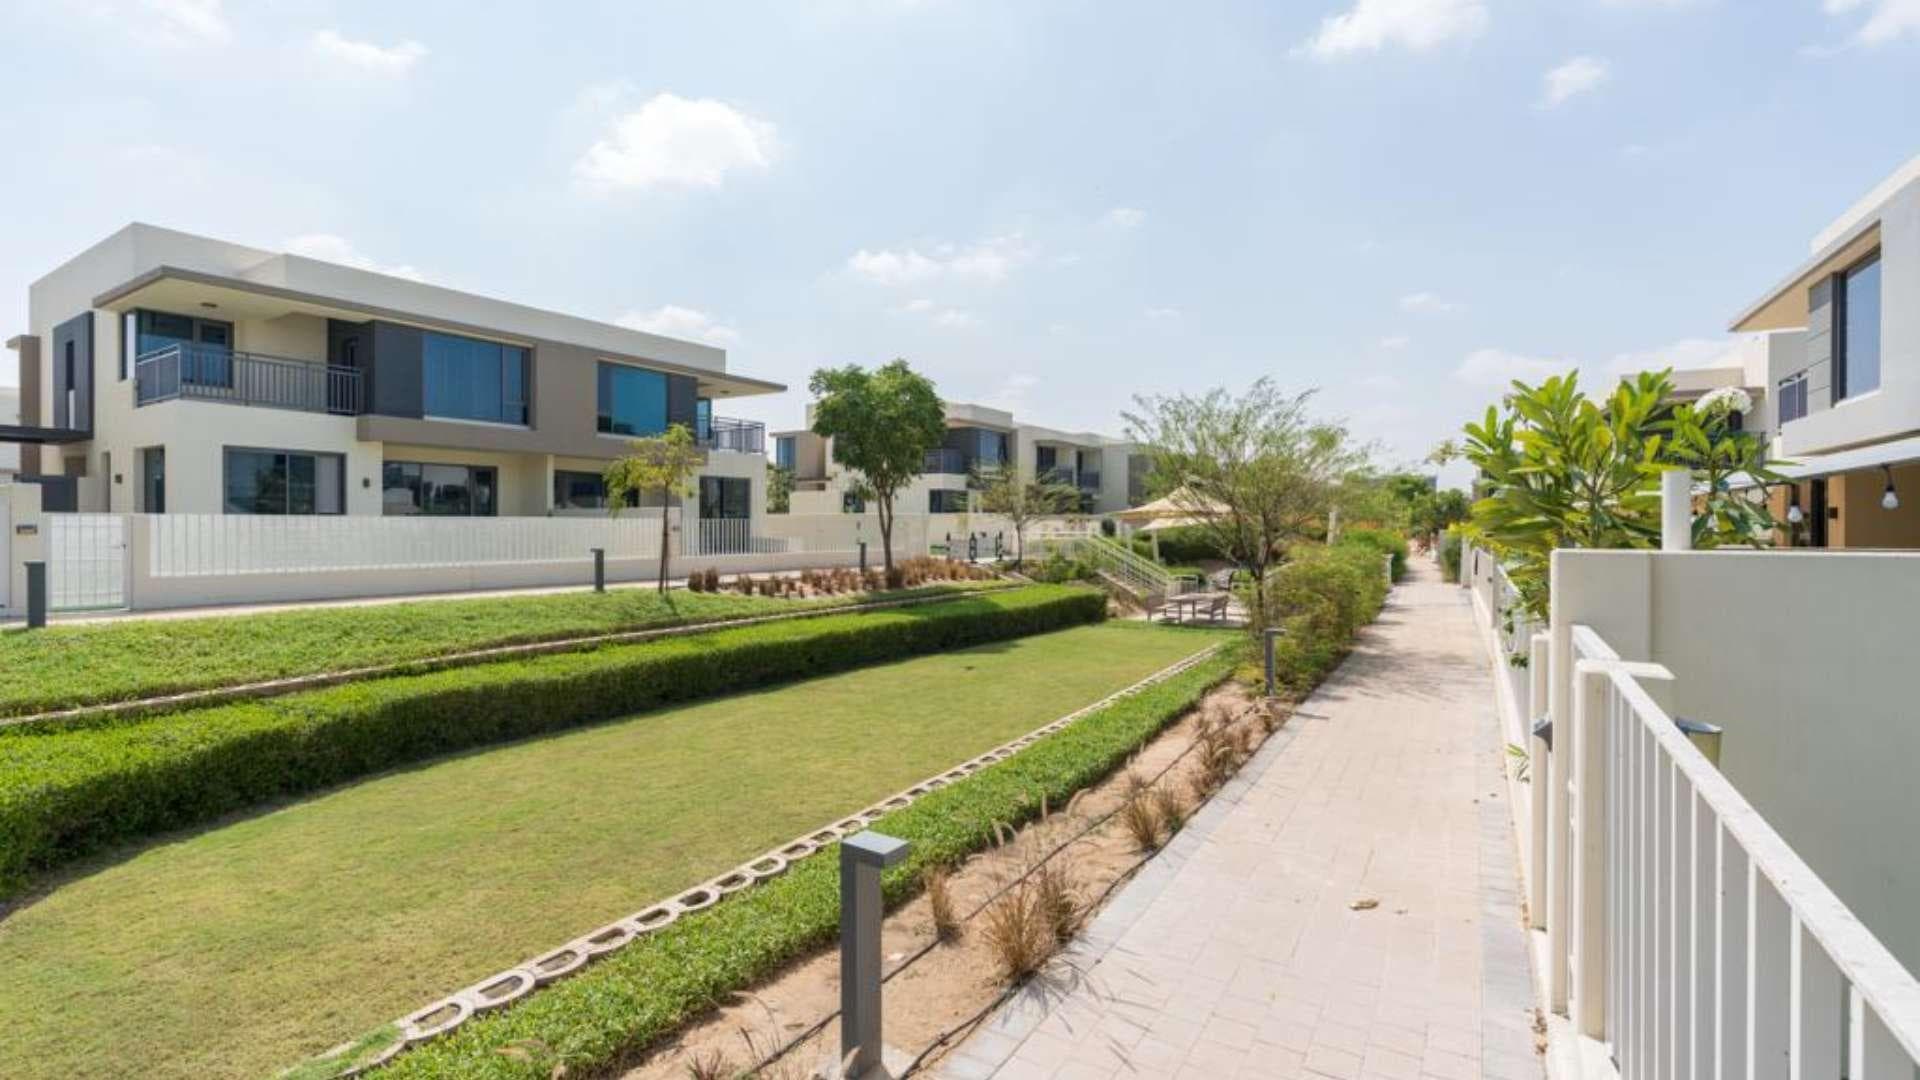 4 Bedroom Villa For Rent Maple At Dubai Hills Estate Lp37569 12f7493a63b8c900.jpg